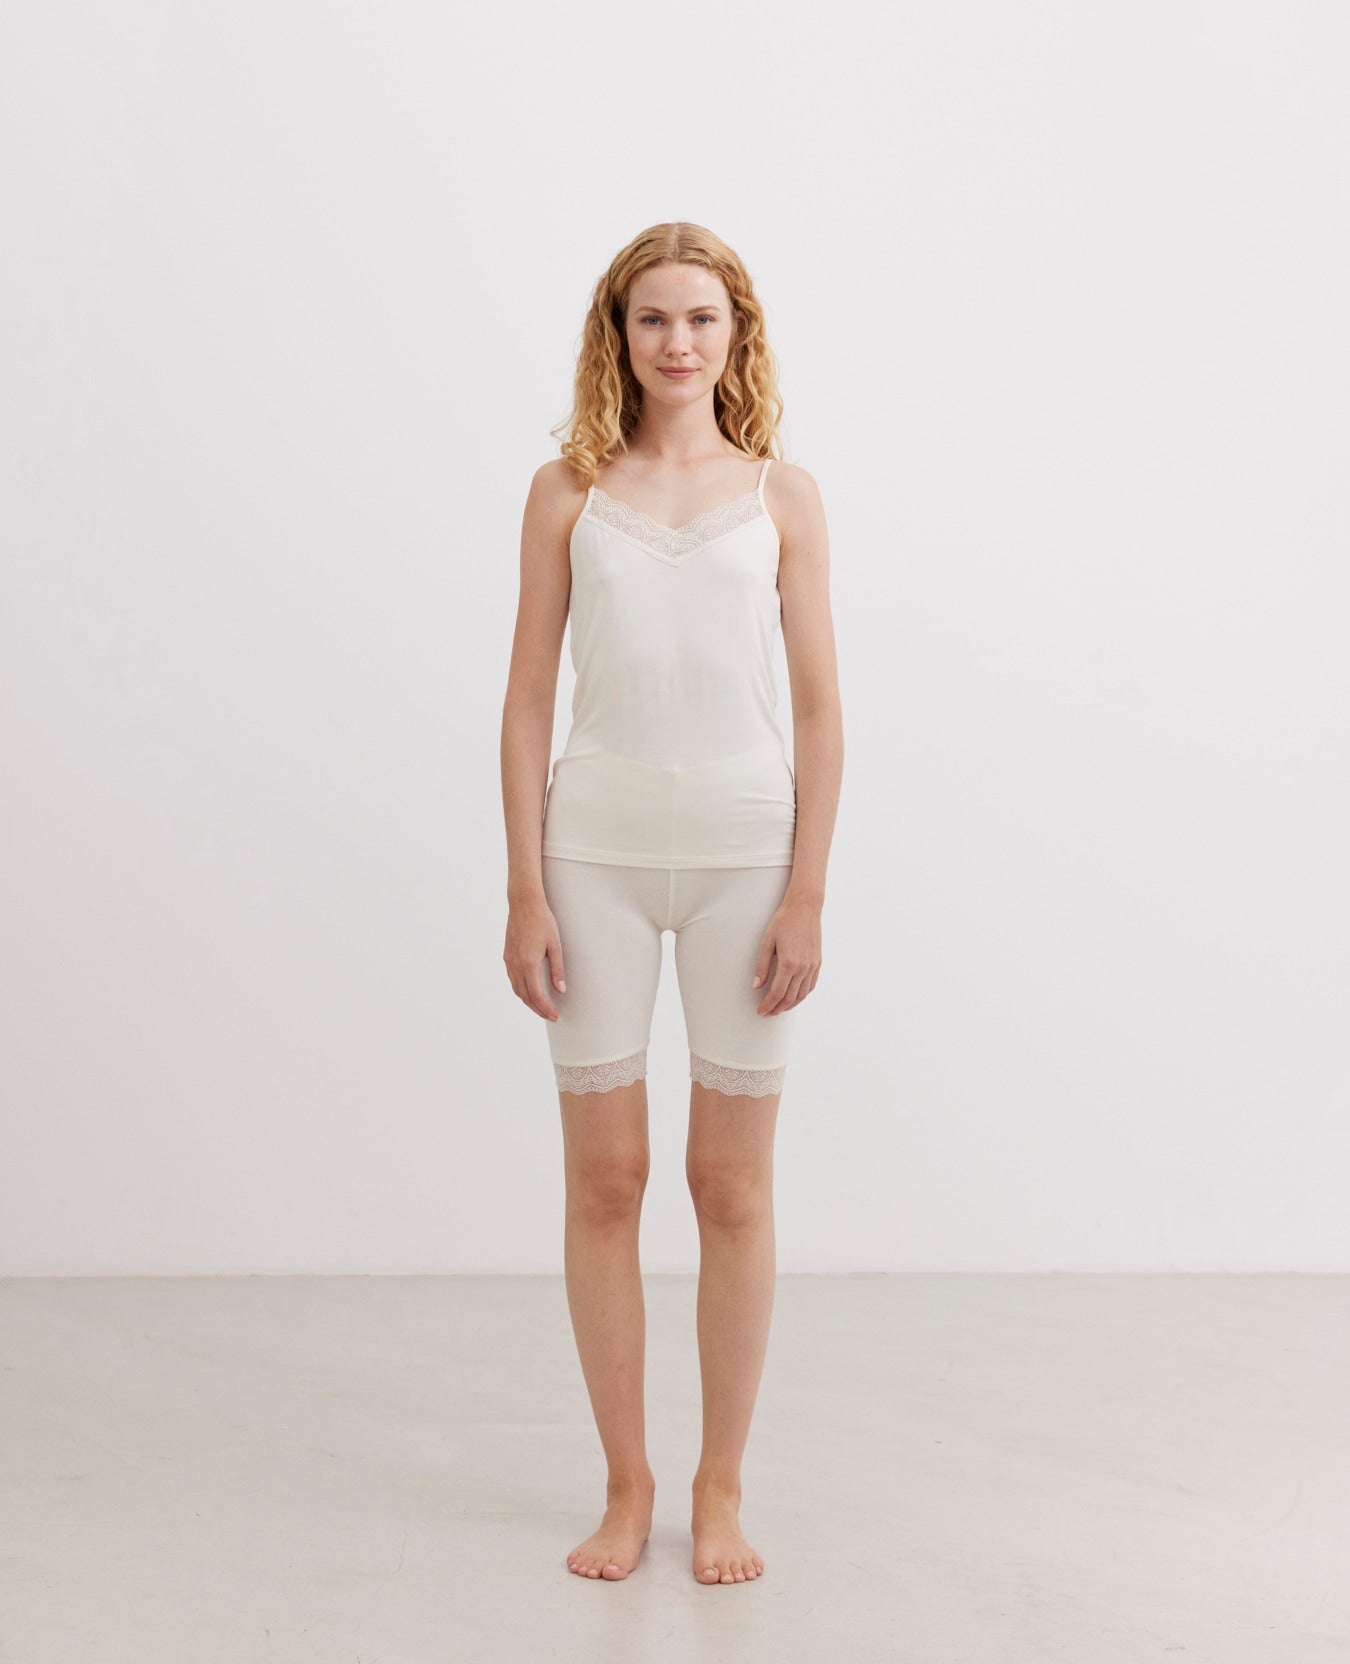 Women's High-Rise Sweatpants - Universal Thread™ Tan XL